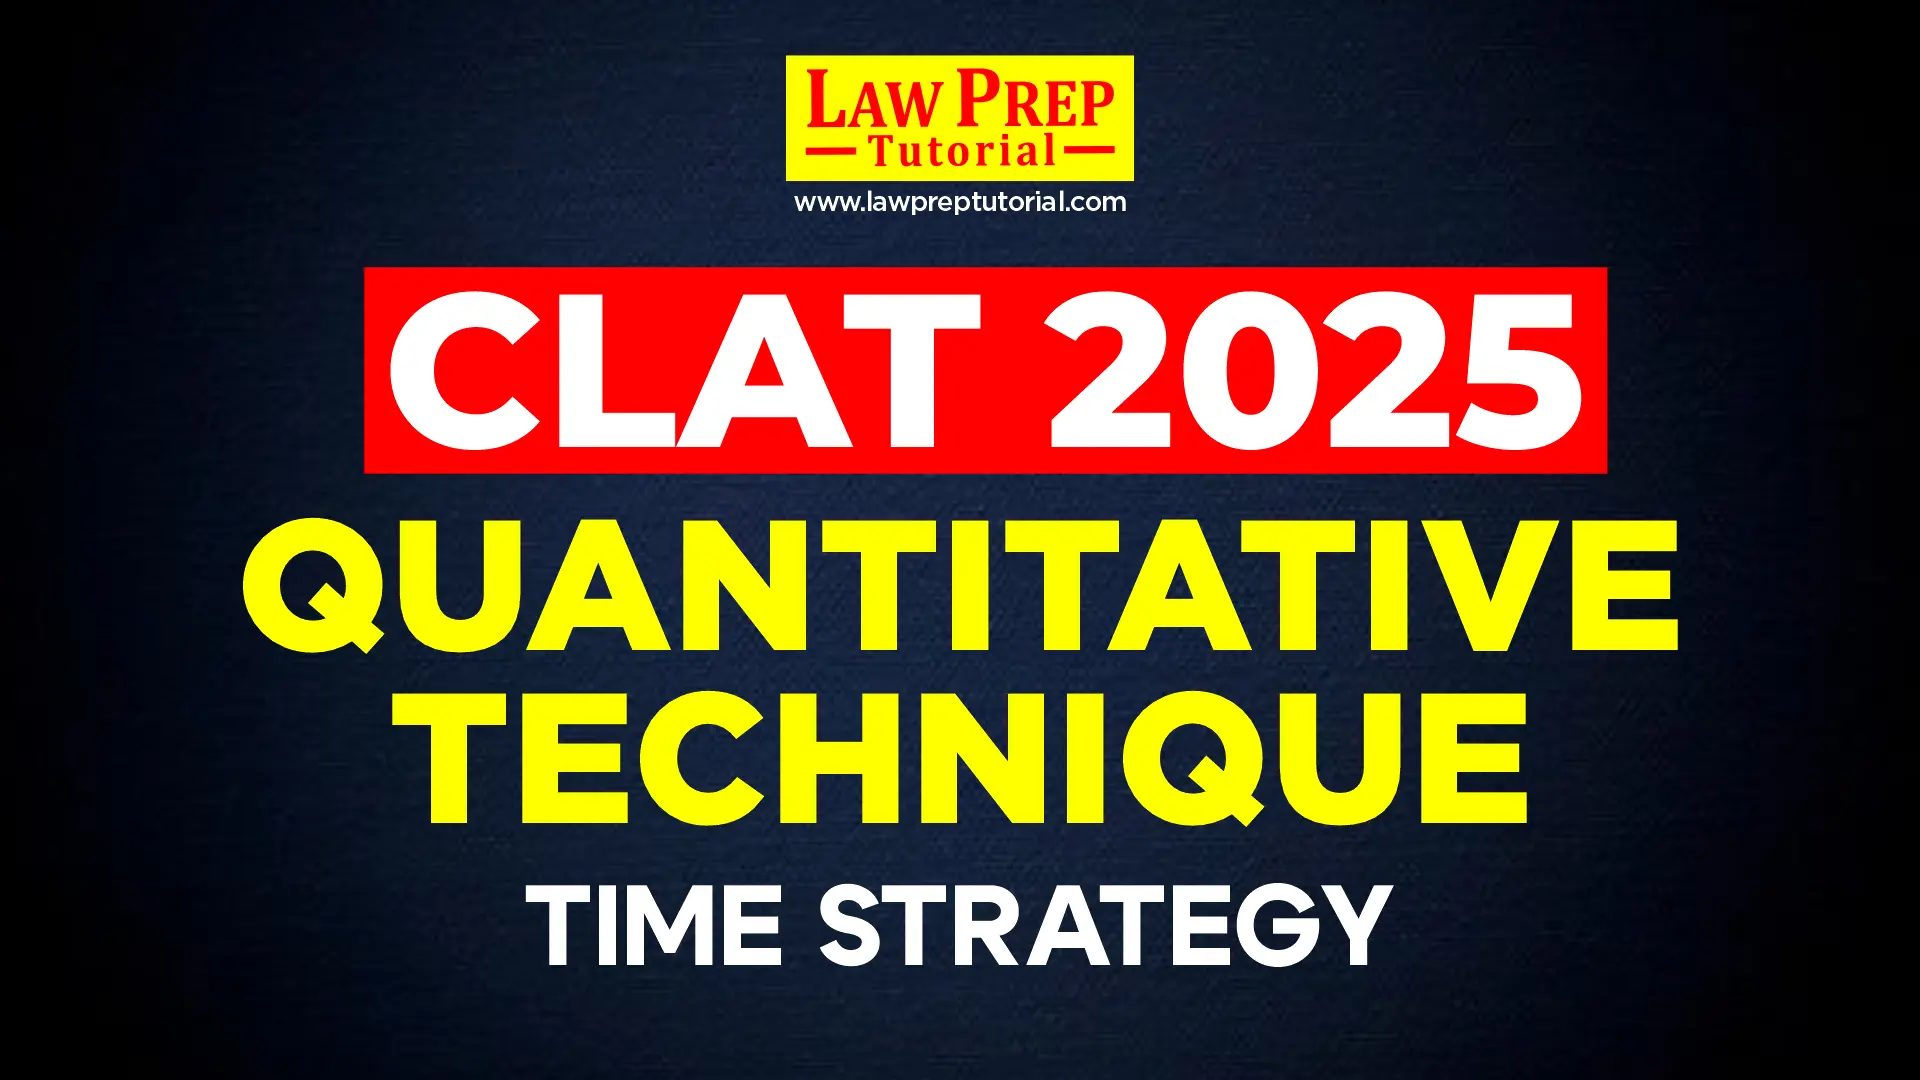 Quantitative Technique Time Strategy For CLAT 2025